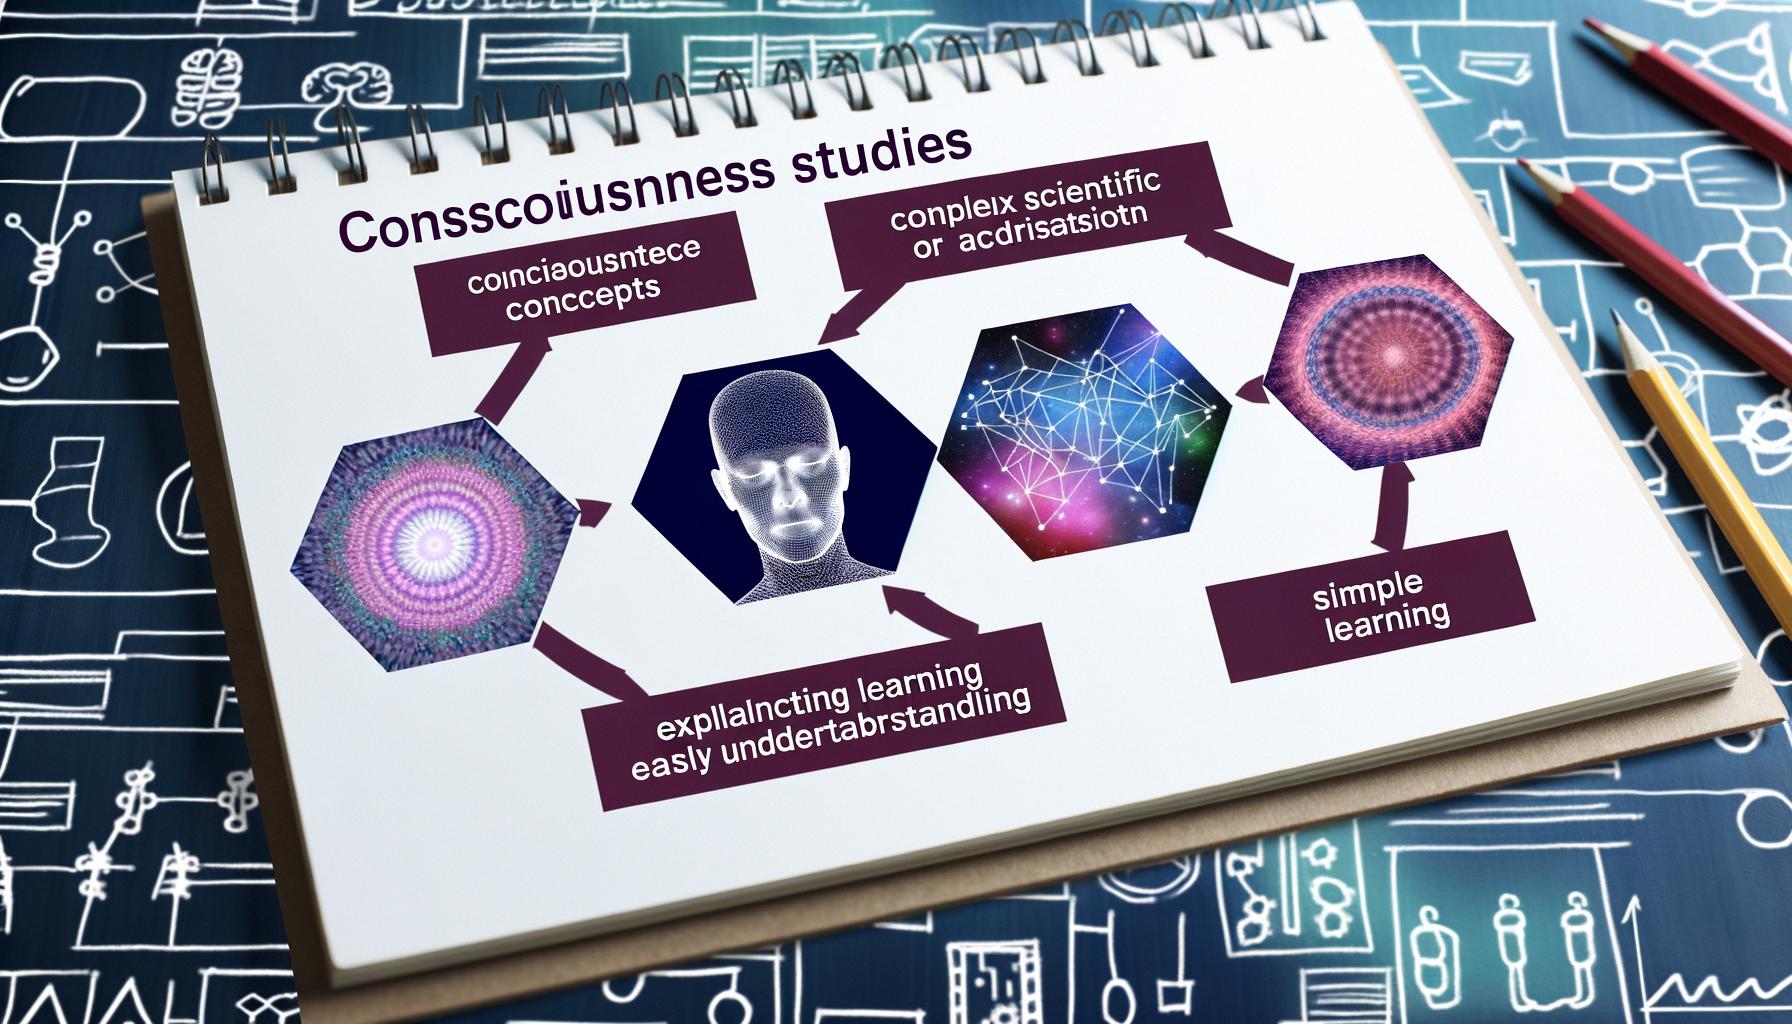 Advancements in consciousness studies challenge current understanding Balanced News